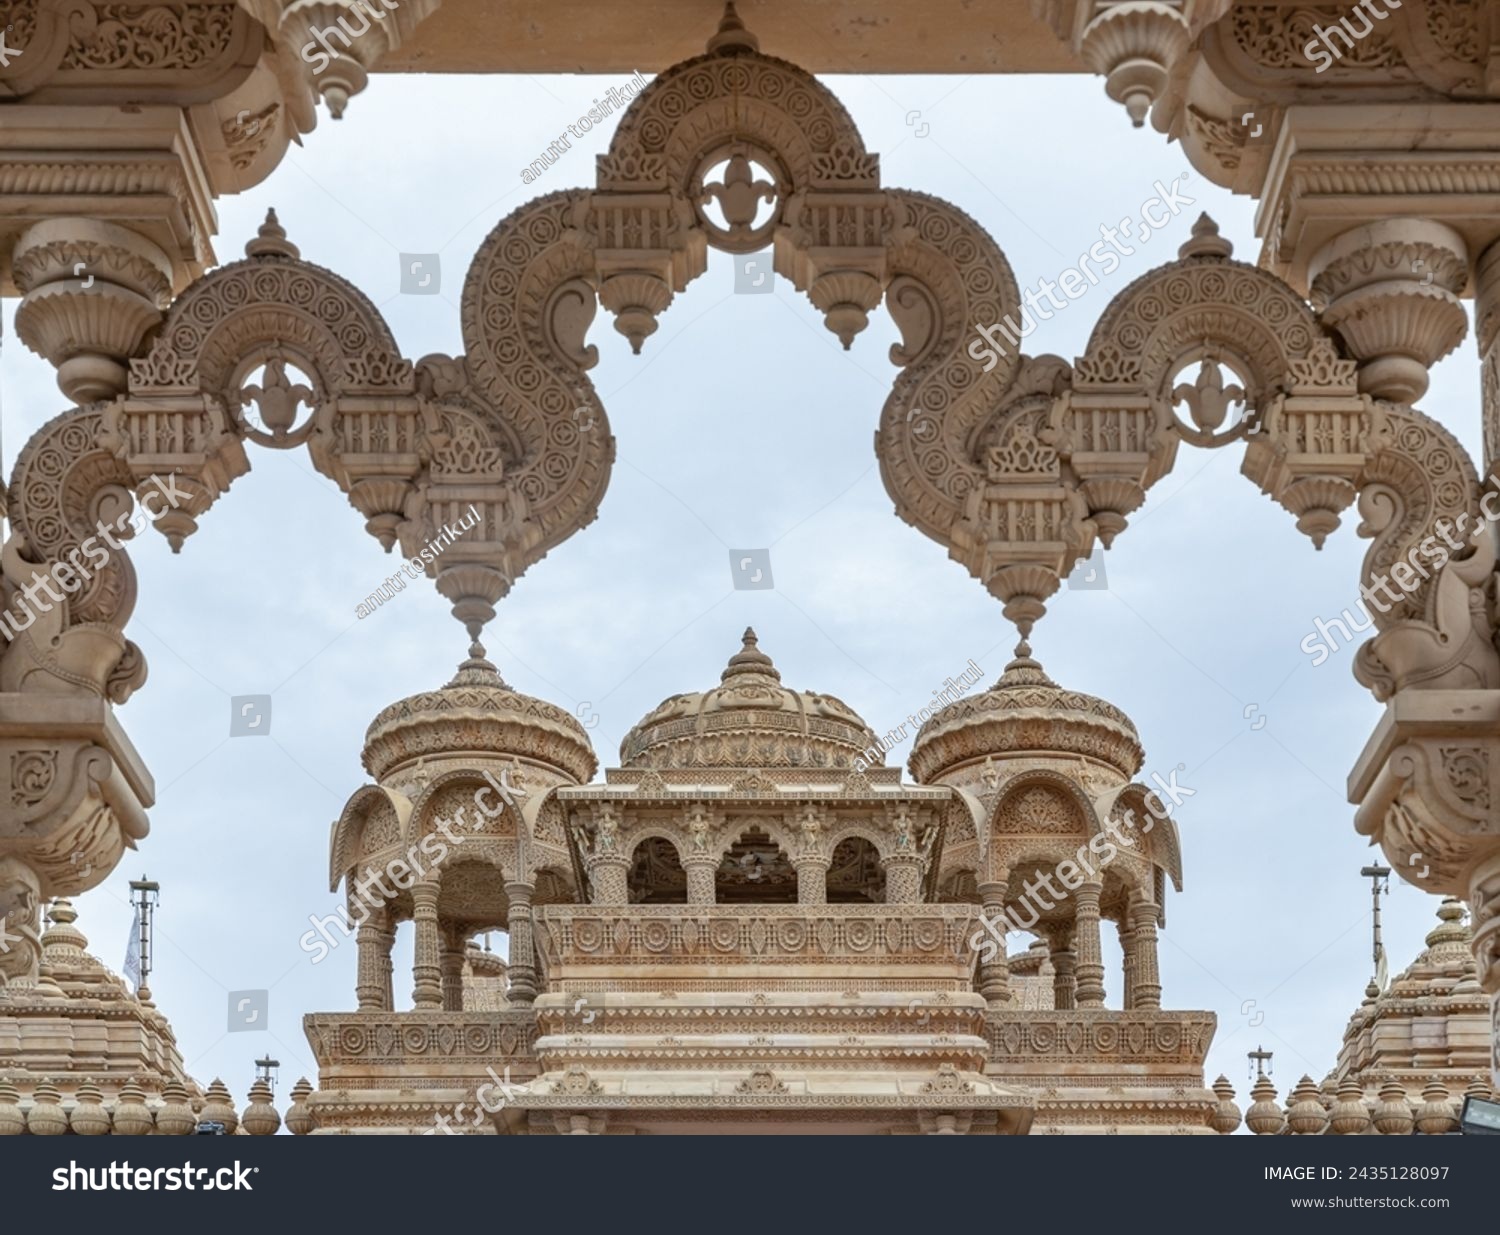 Entrance archway of The Shree Sanatan Hindu Mandir Hindu Temple (The Shri Sanatan Hindu Temple). Gates of Neasden Temple build from Elaborately carved Jaisalmer limestone,  #2435128097